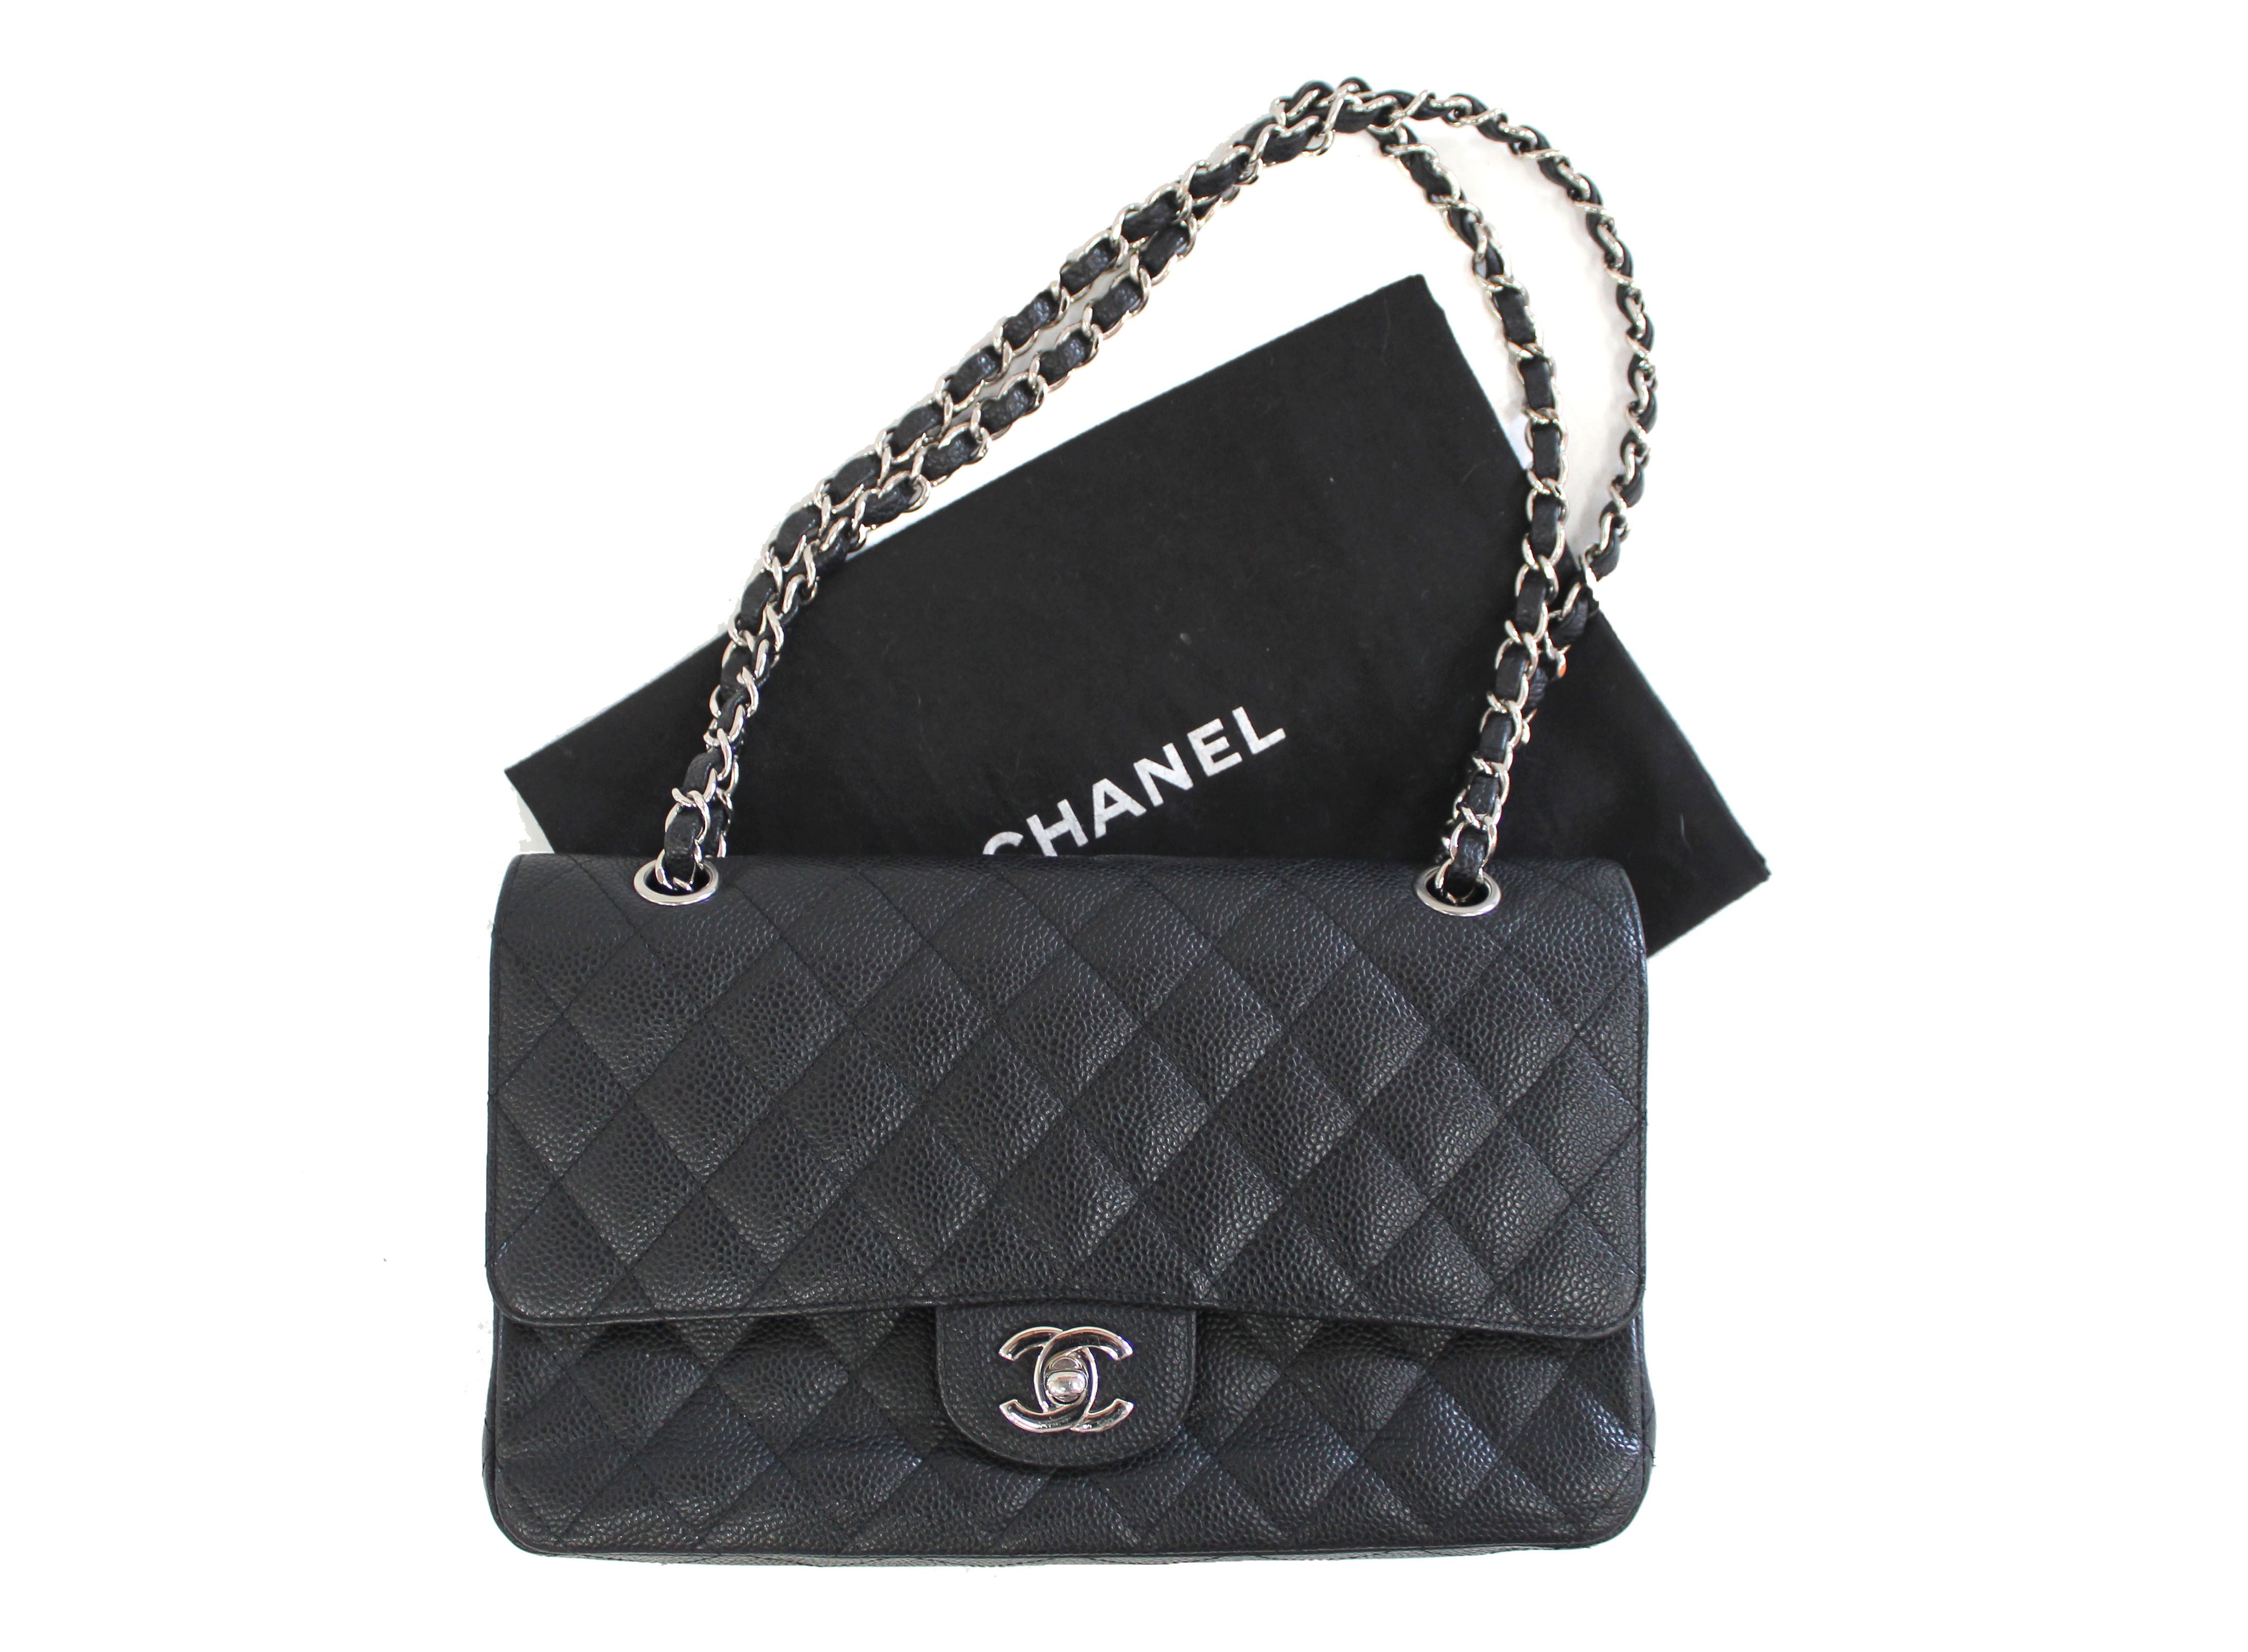 Authentic Chanel Classic Black Caviar Leather Medium Double Flap